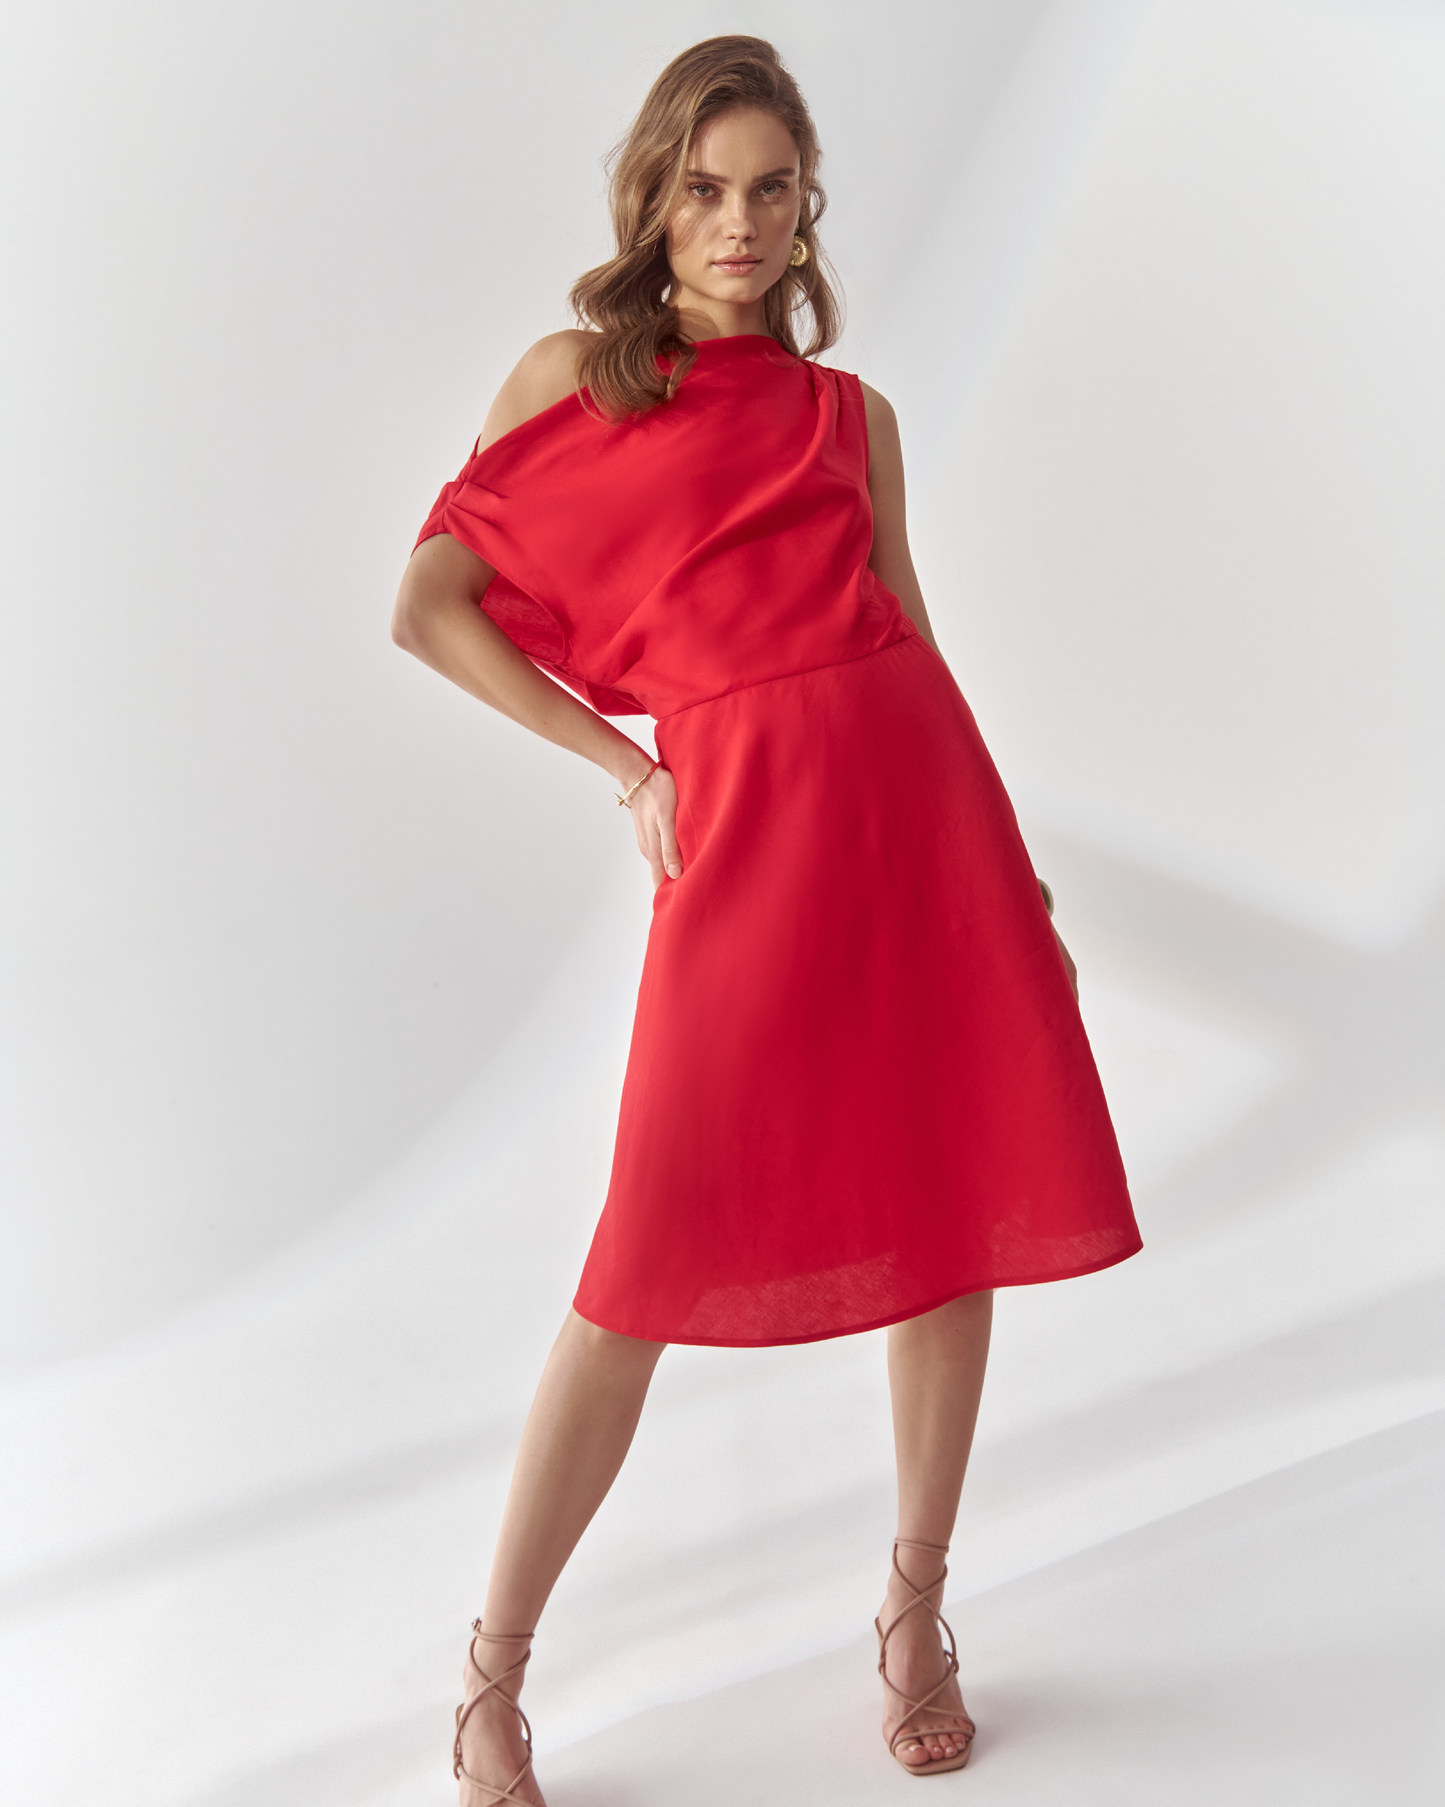 Harlem Red Dress